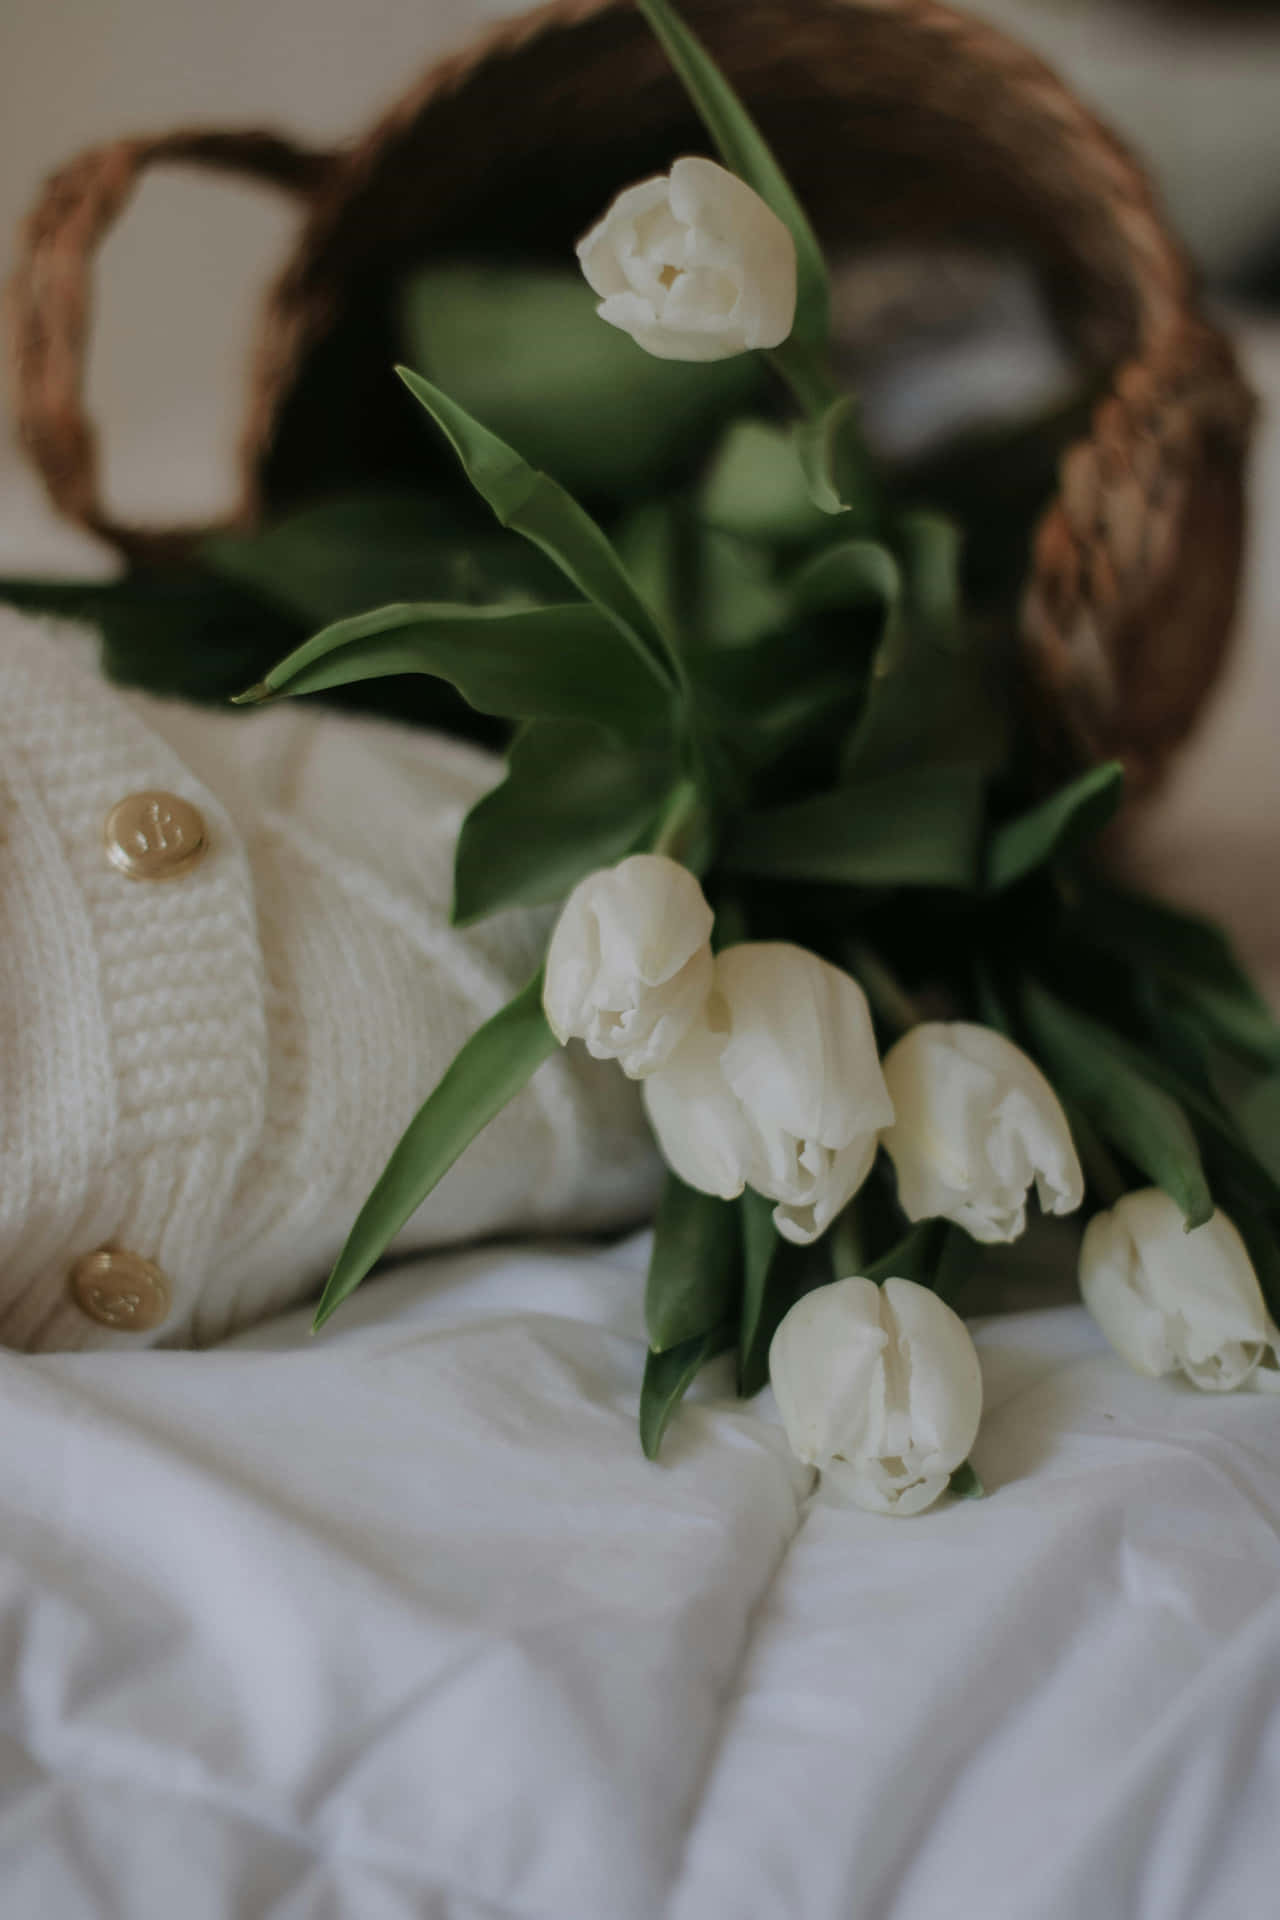 White Tulipsand Cozy Sweater Aesthetic Wallpaper